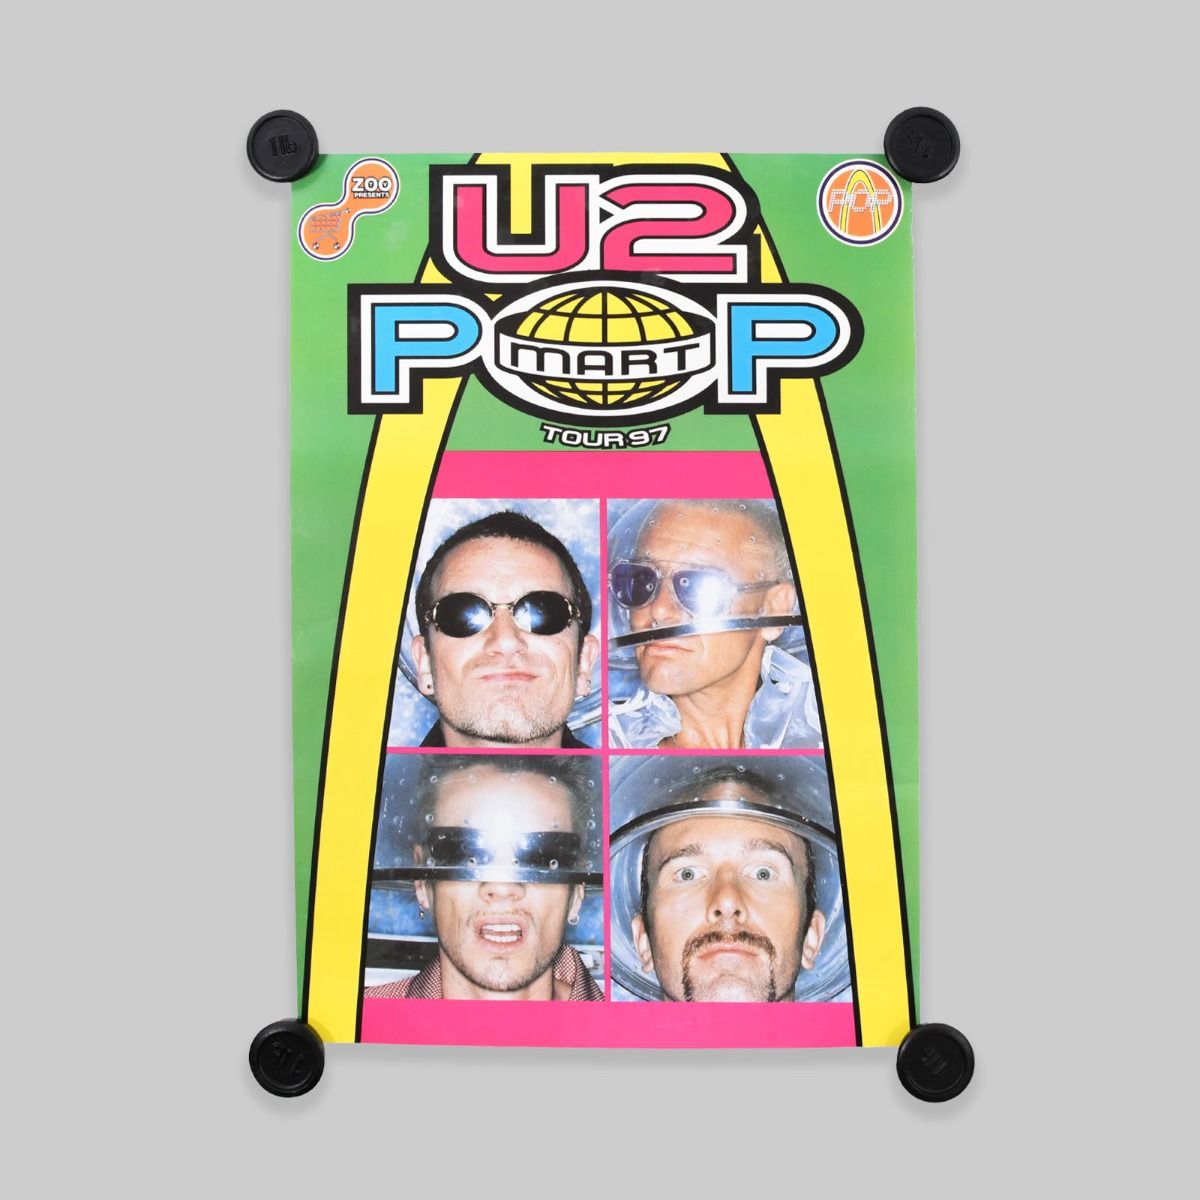 U2 Popmart Tour 97 A1 Poster